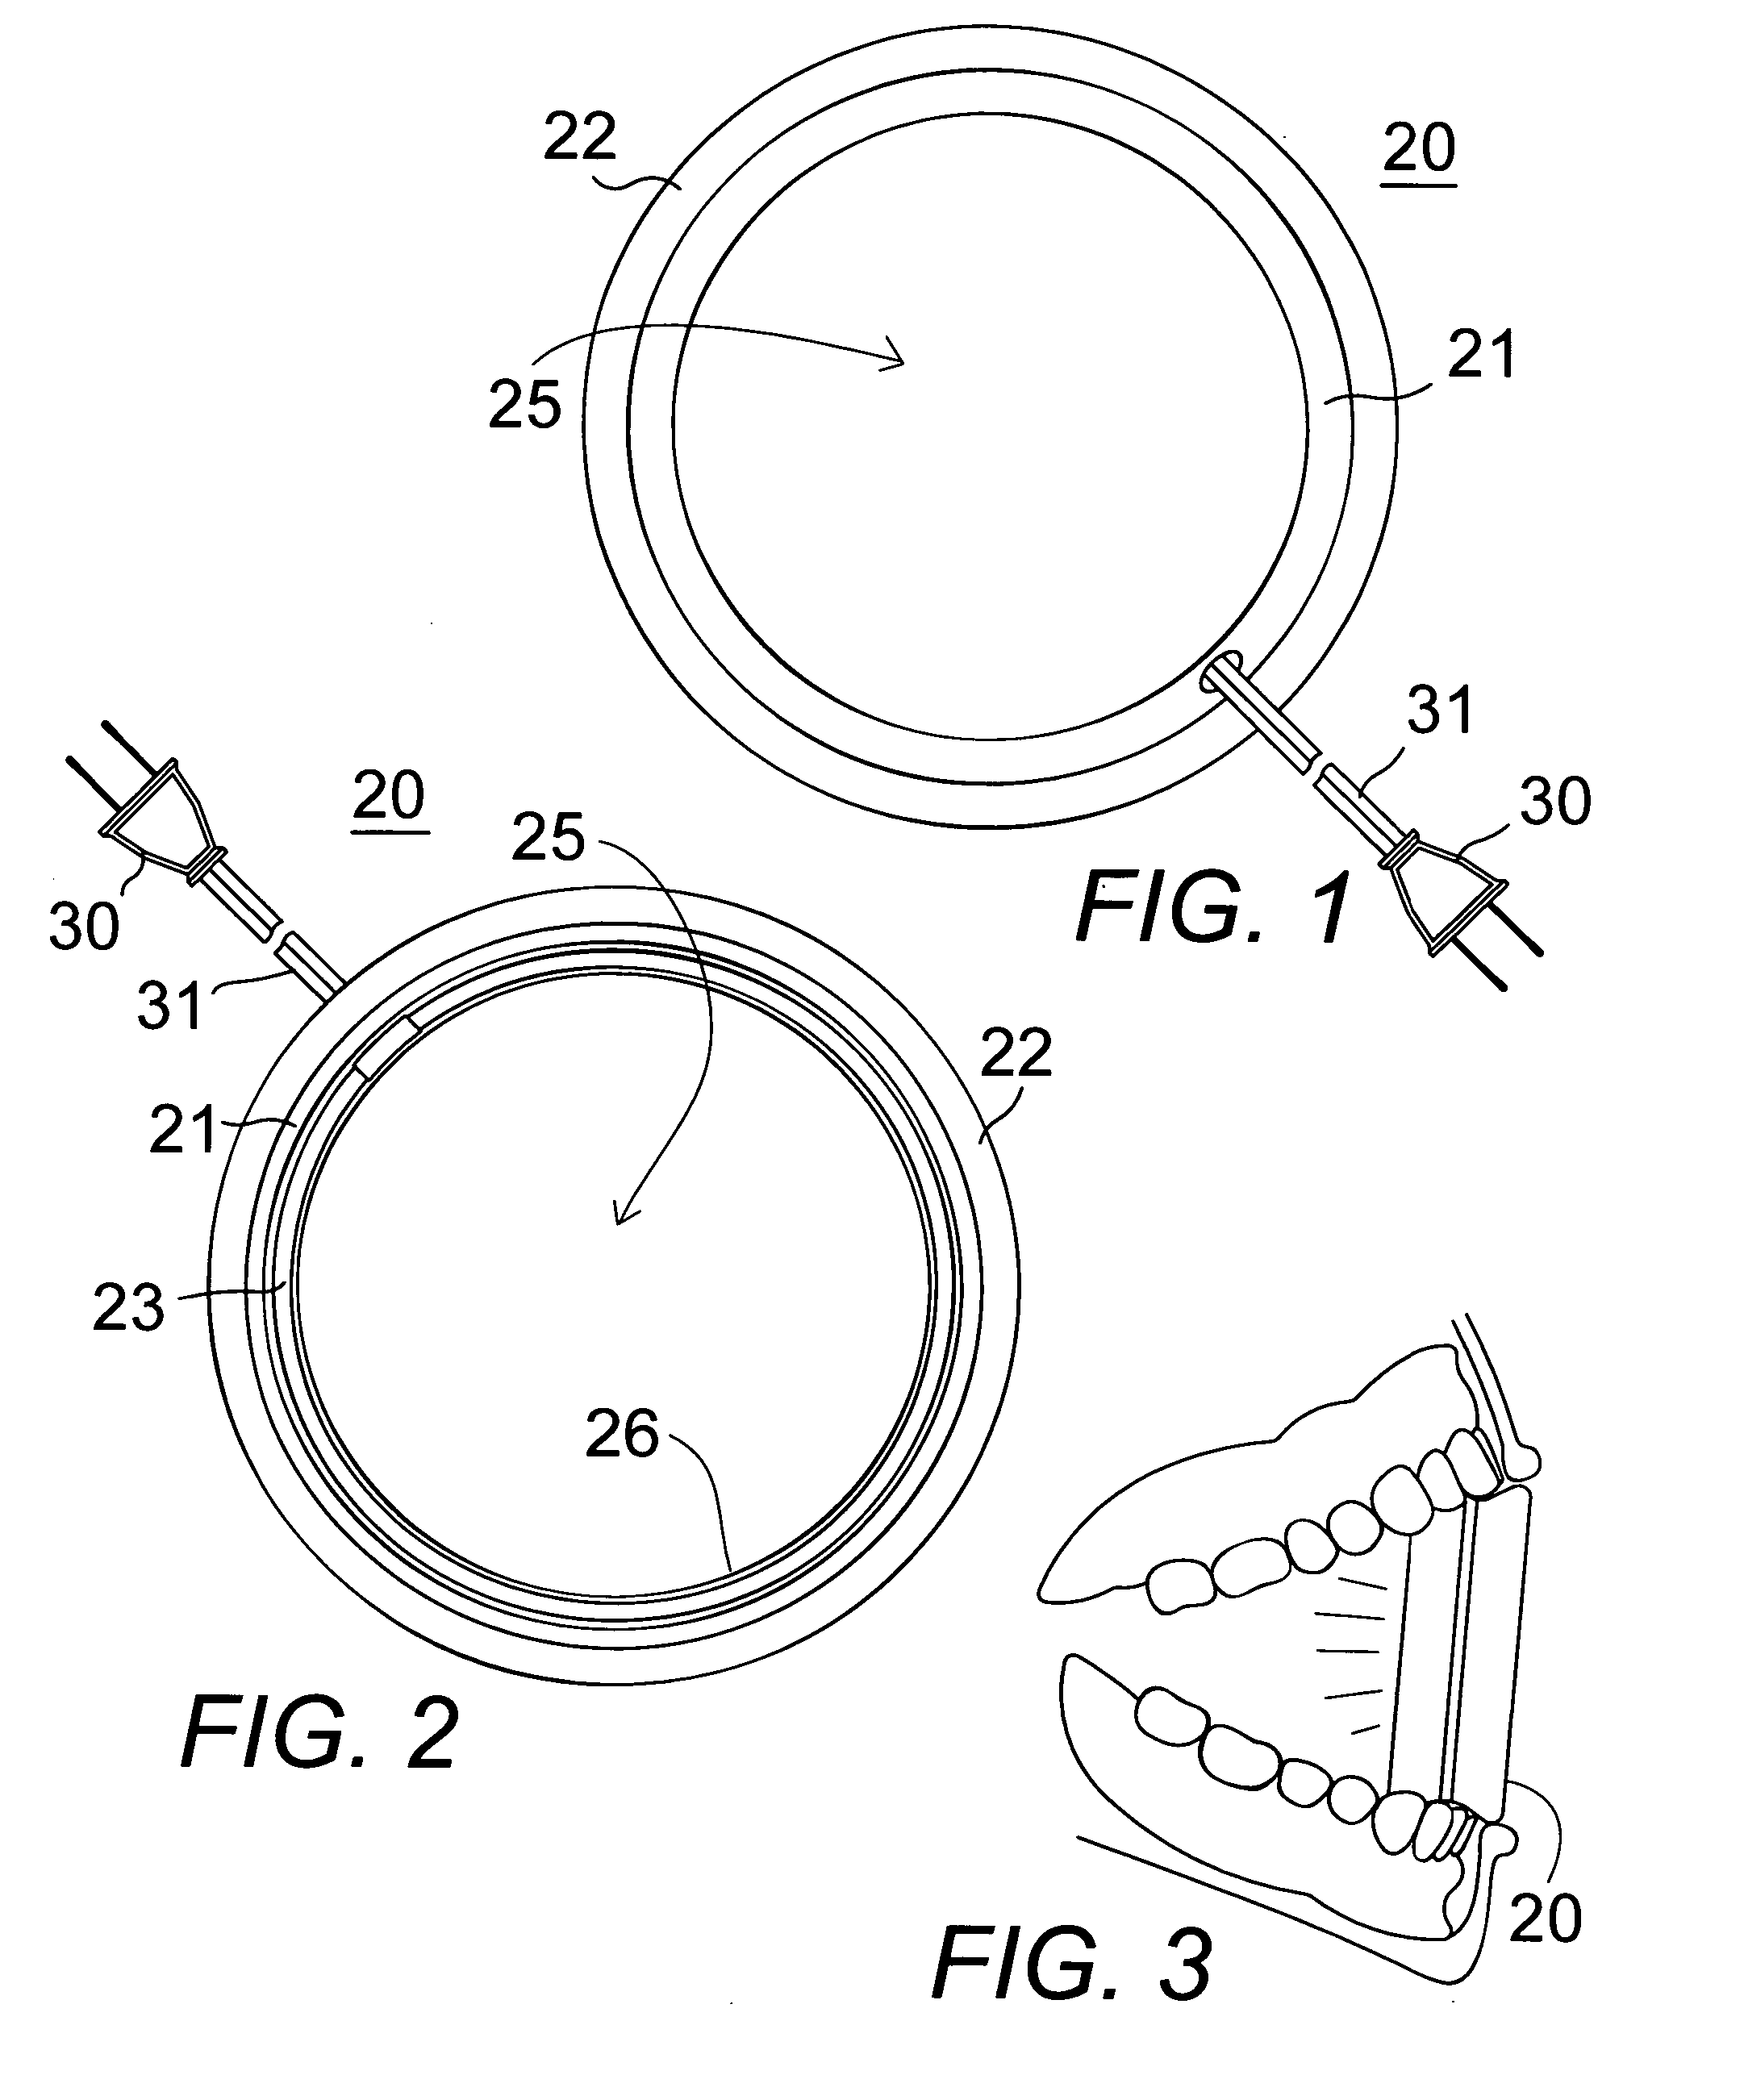 Ring-shaped illuminated mouth prop